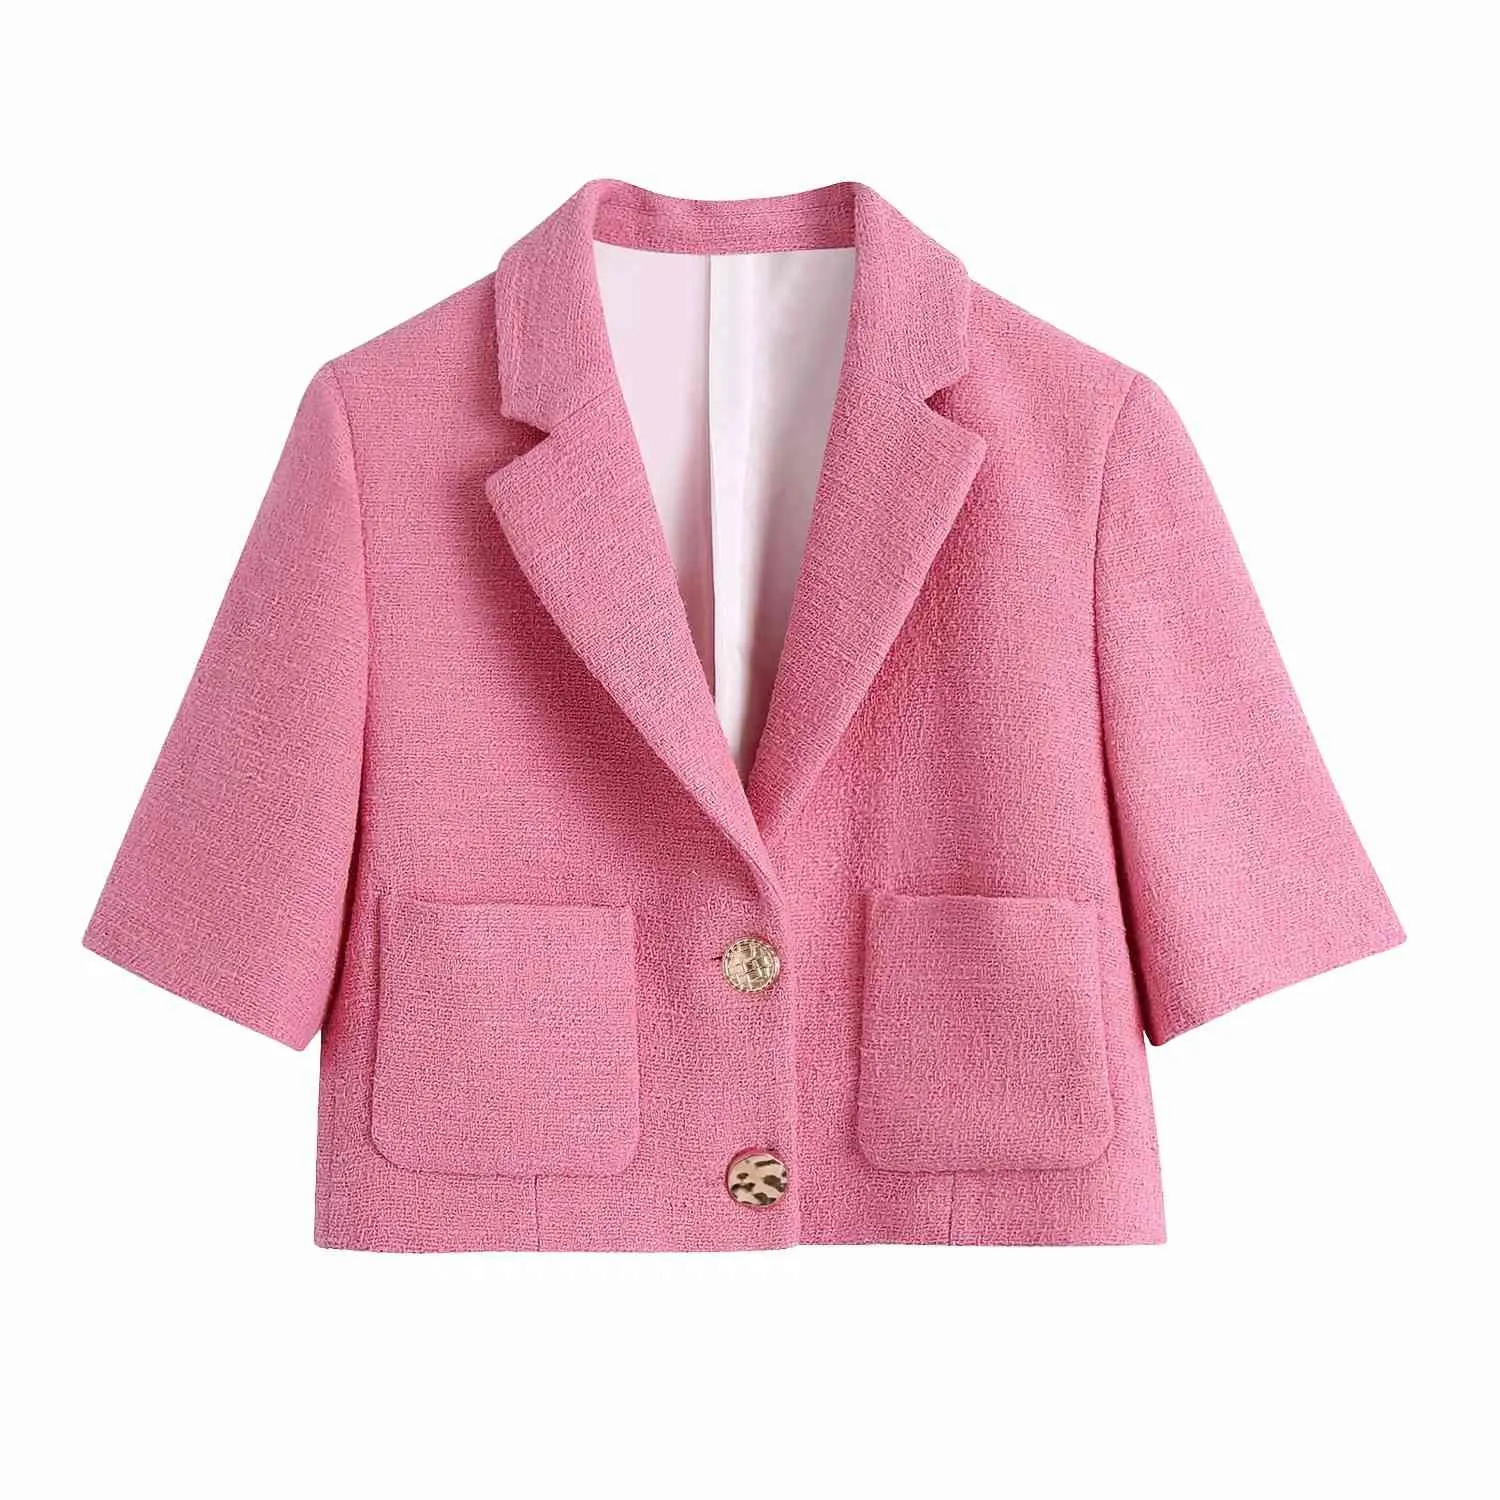 Mulheres moda tweed casual colhido textura rosa blazer bolsos de verão único breasted curto blazer jaqueta casaco tops 210521